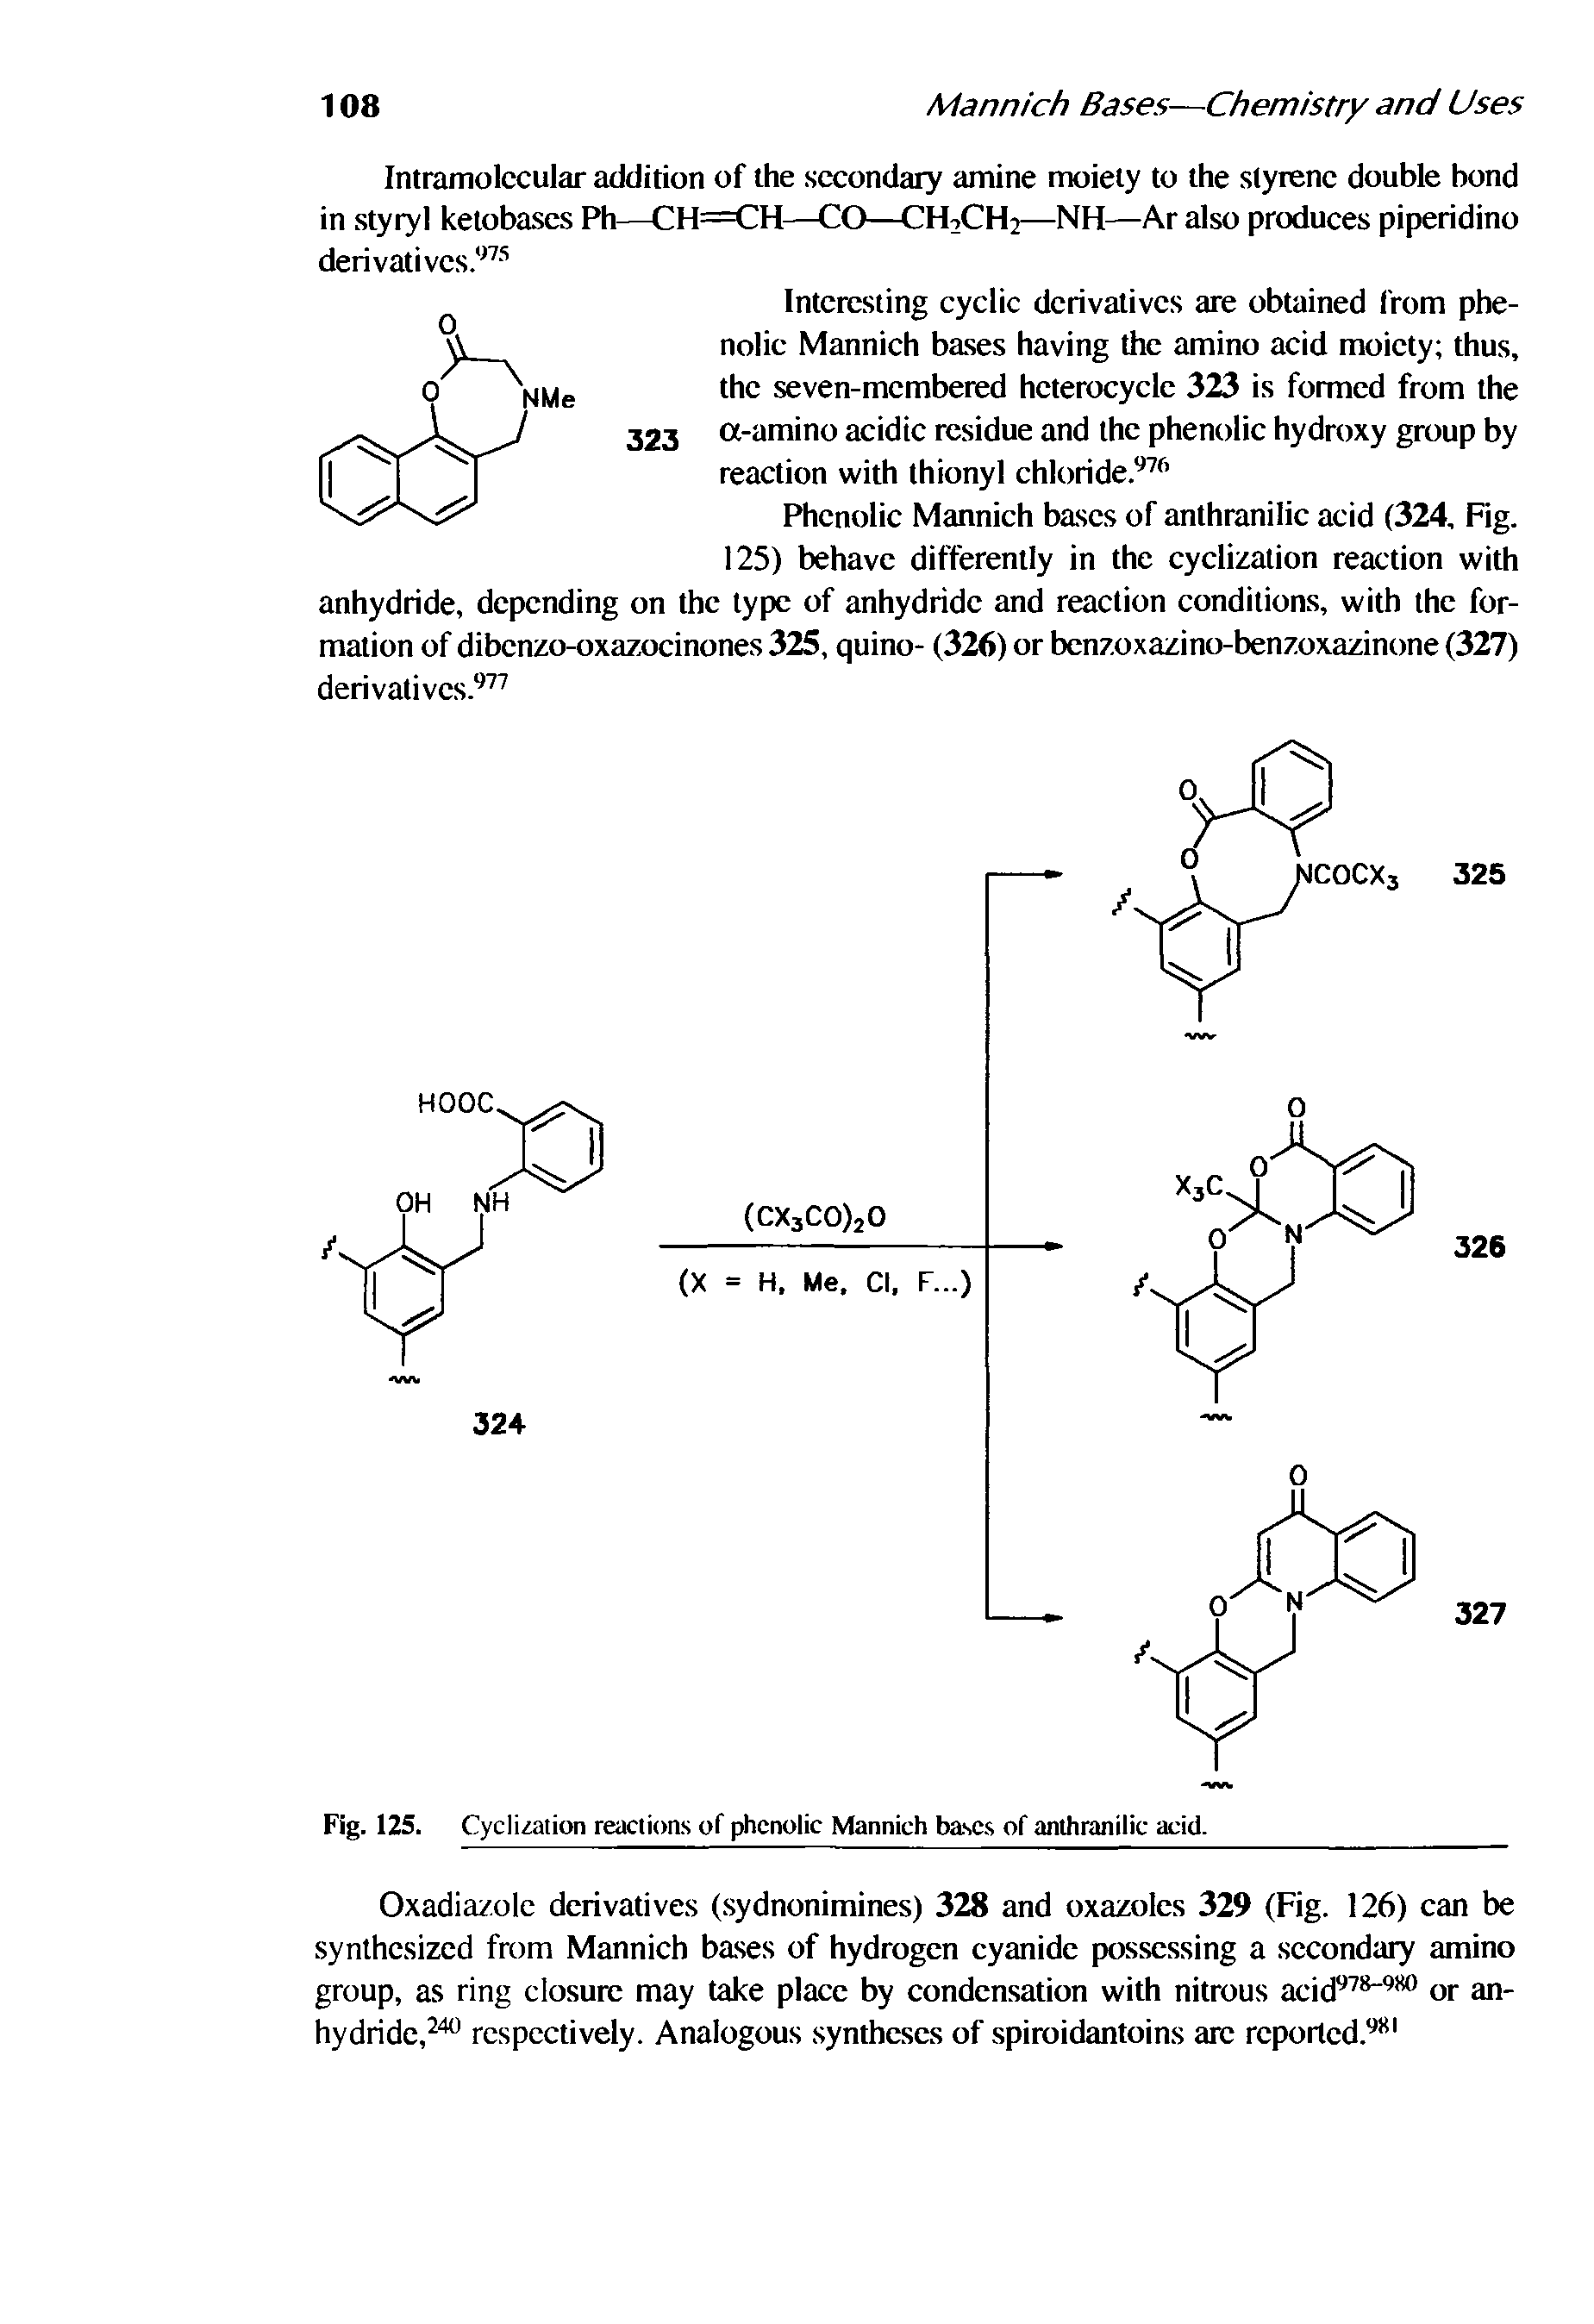 Fig. 125. Cyclizalion reactions of phenolic Mannich basc.s of anthranilic add.